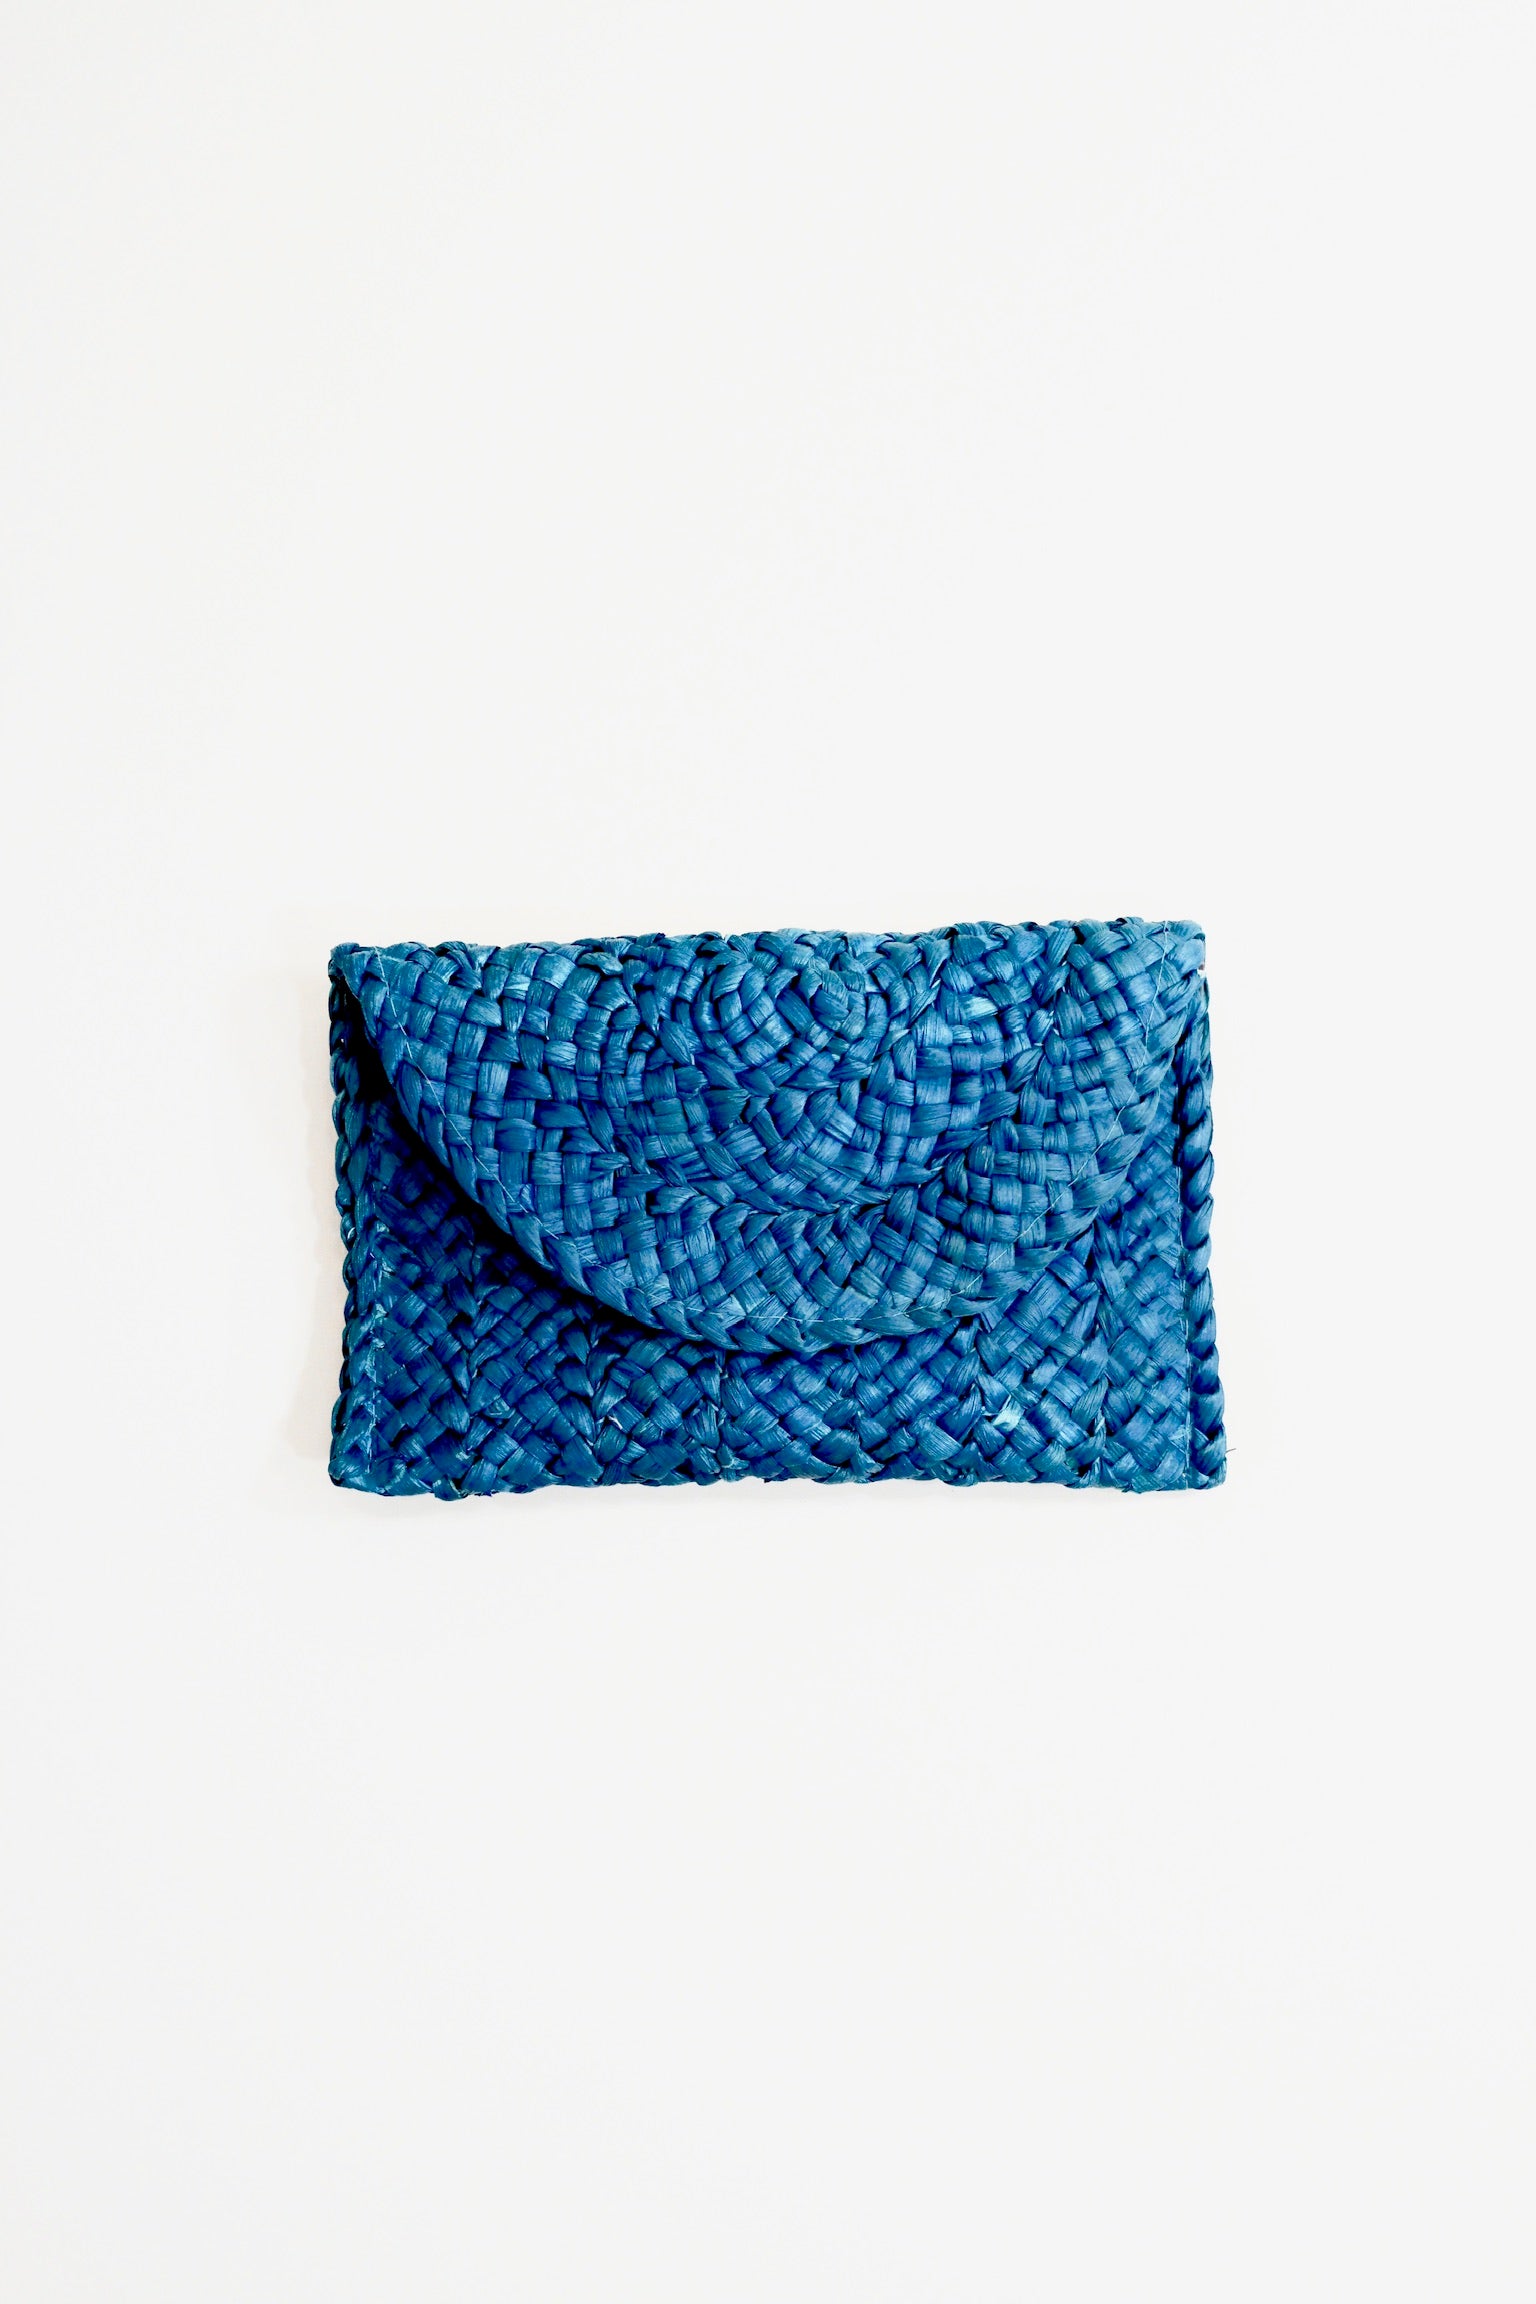 Blue Handmade Straw Clutch Rattan Bag | Collective Request 